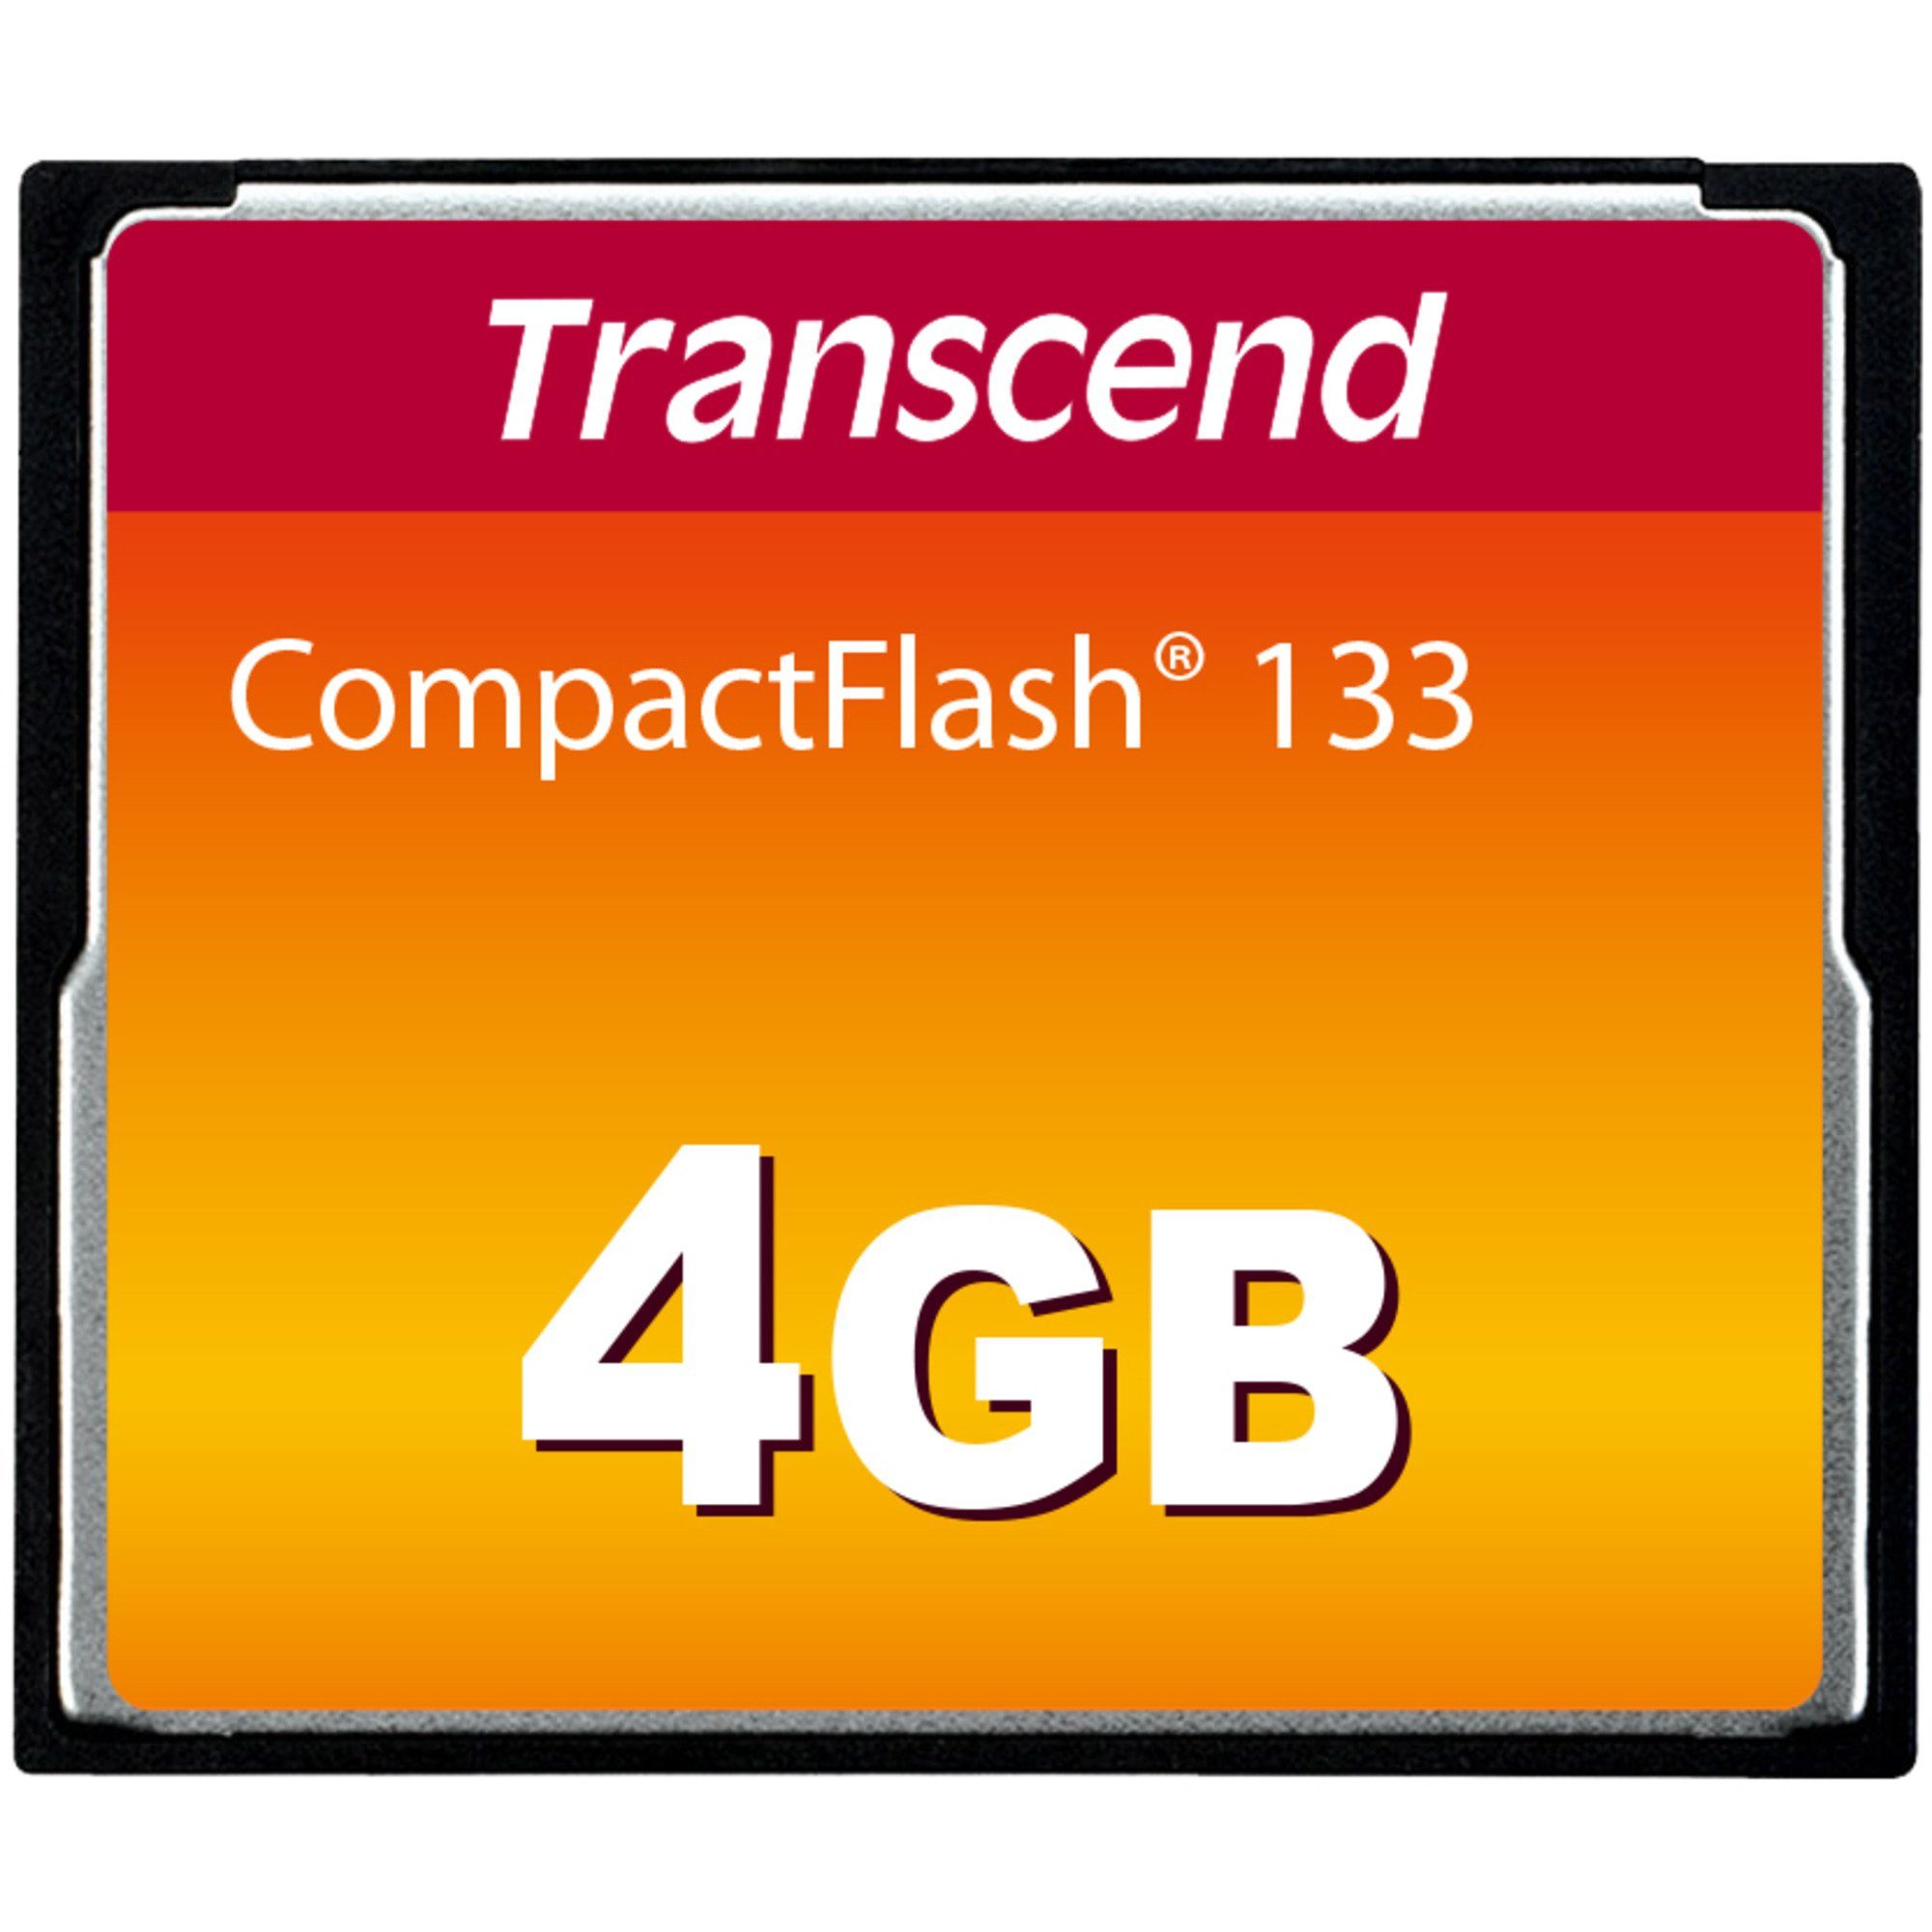 Transcend CompactFlash 133 4 GB Speicherkarte